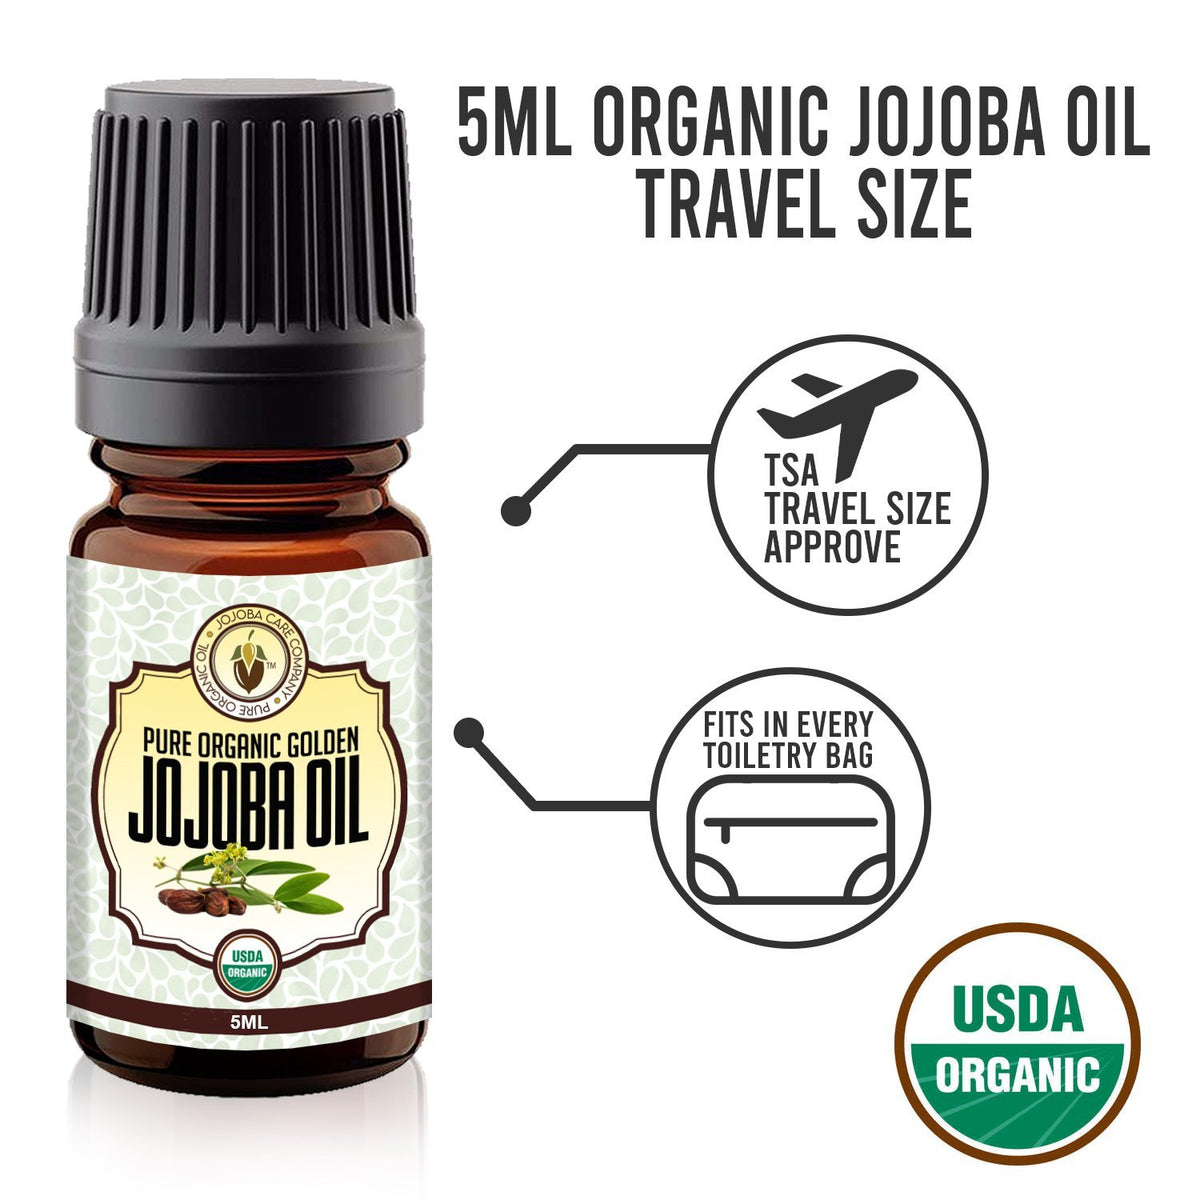 Jojoba Oil For Piercings: The Natural Solution For Happy Ears